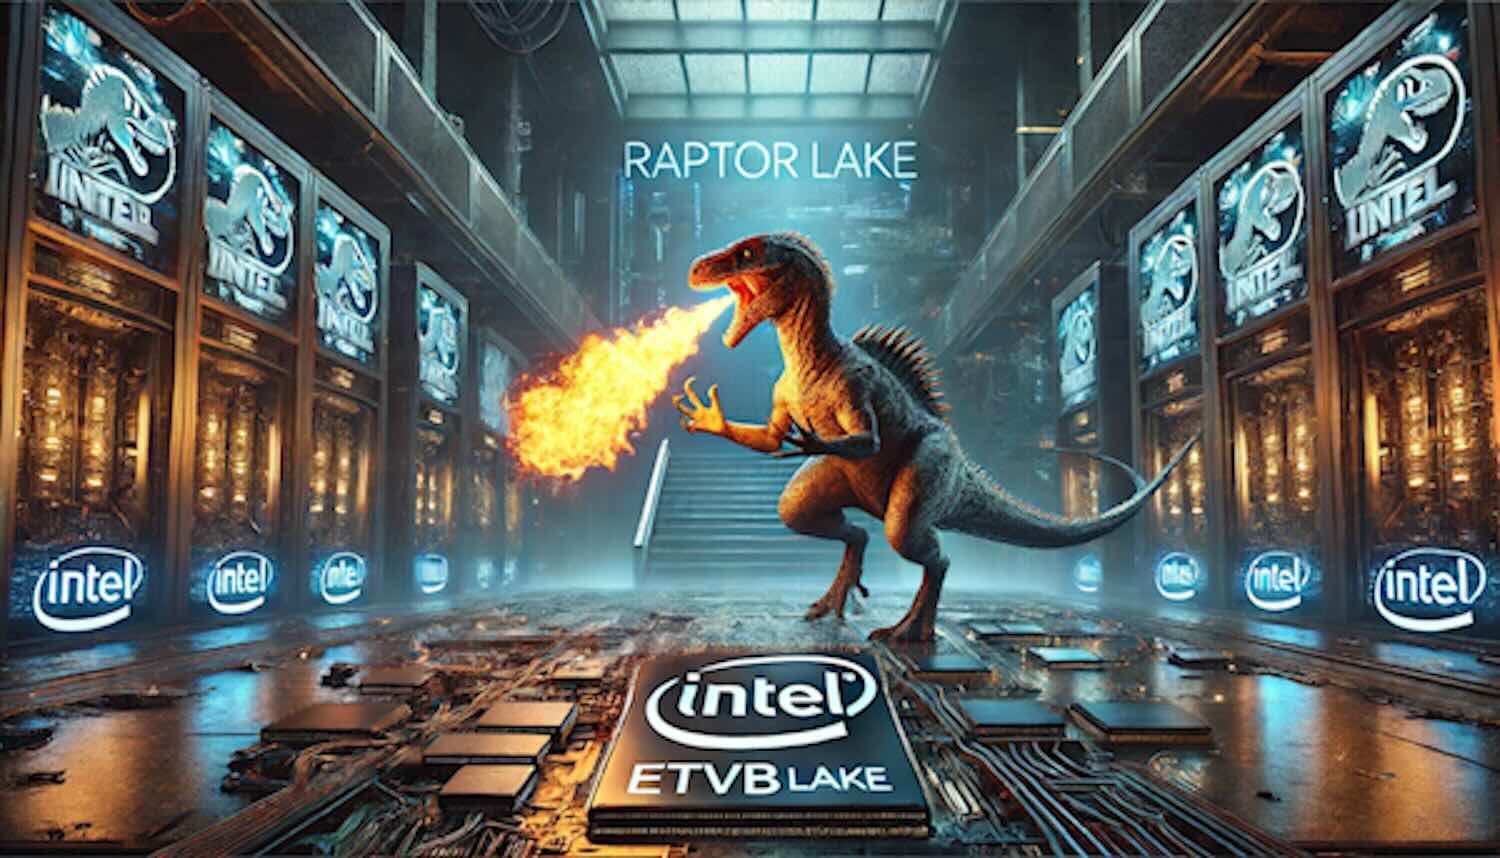 Ban-sao-Intel-Evlake.jpeg